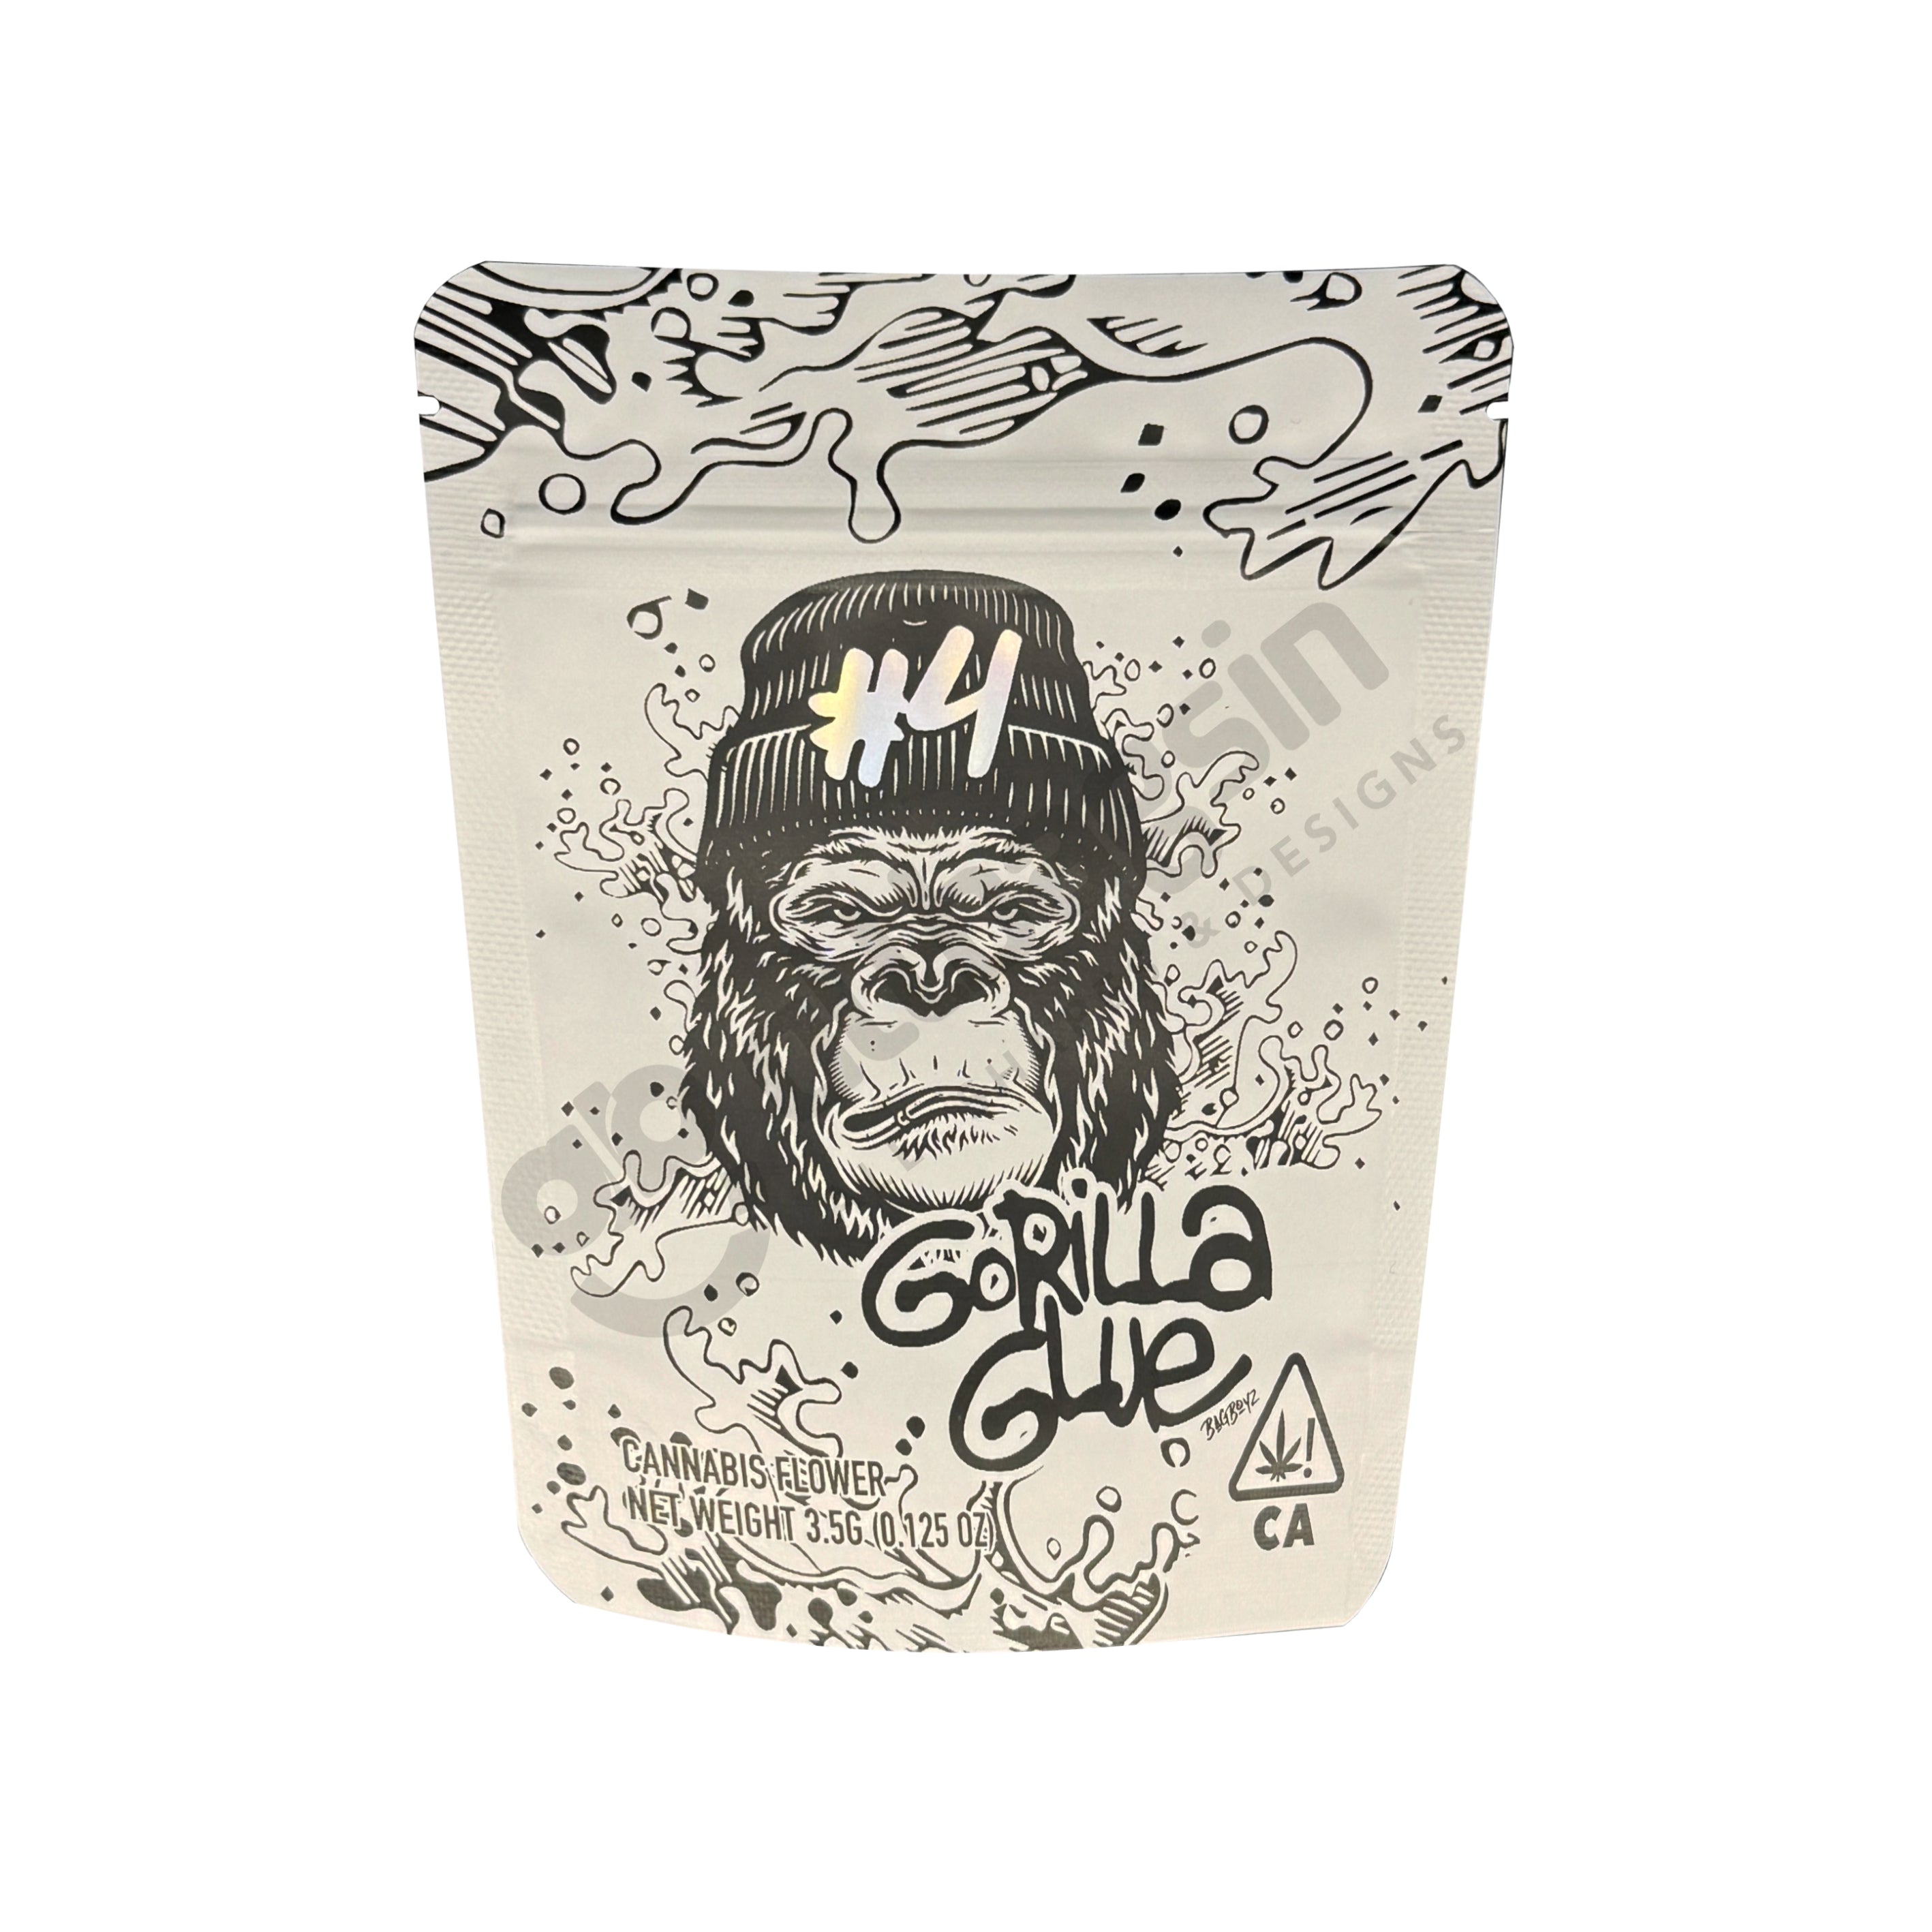 Gorilla Glue 3.5g Mylar Bag